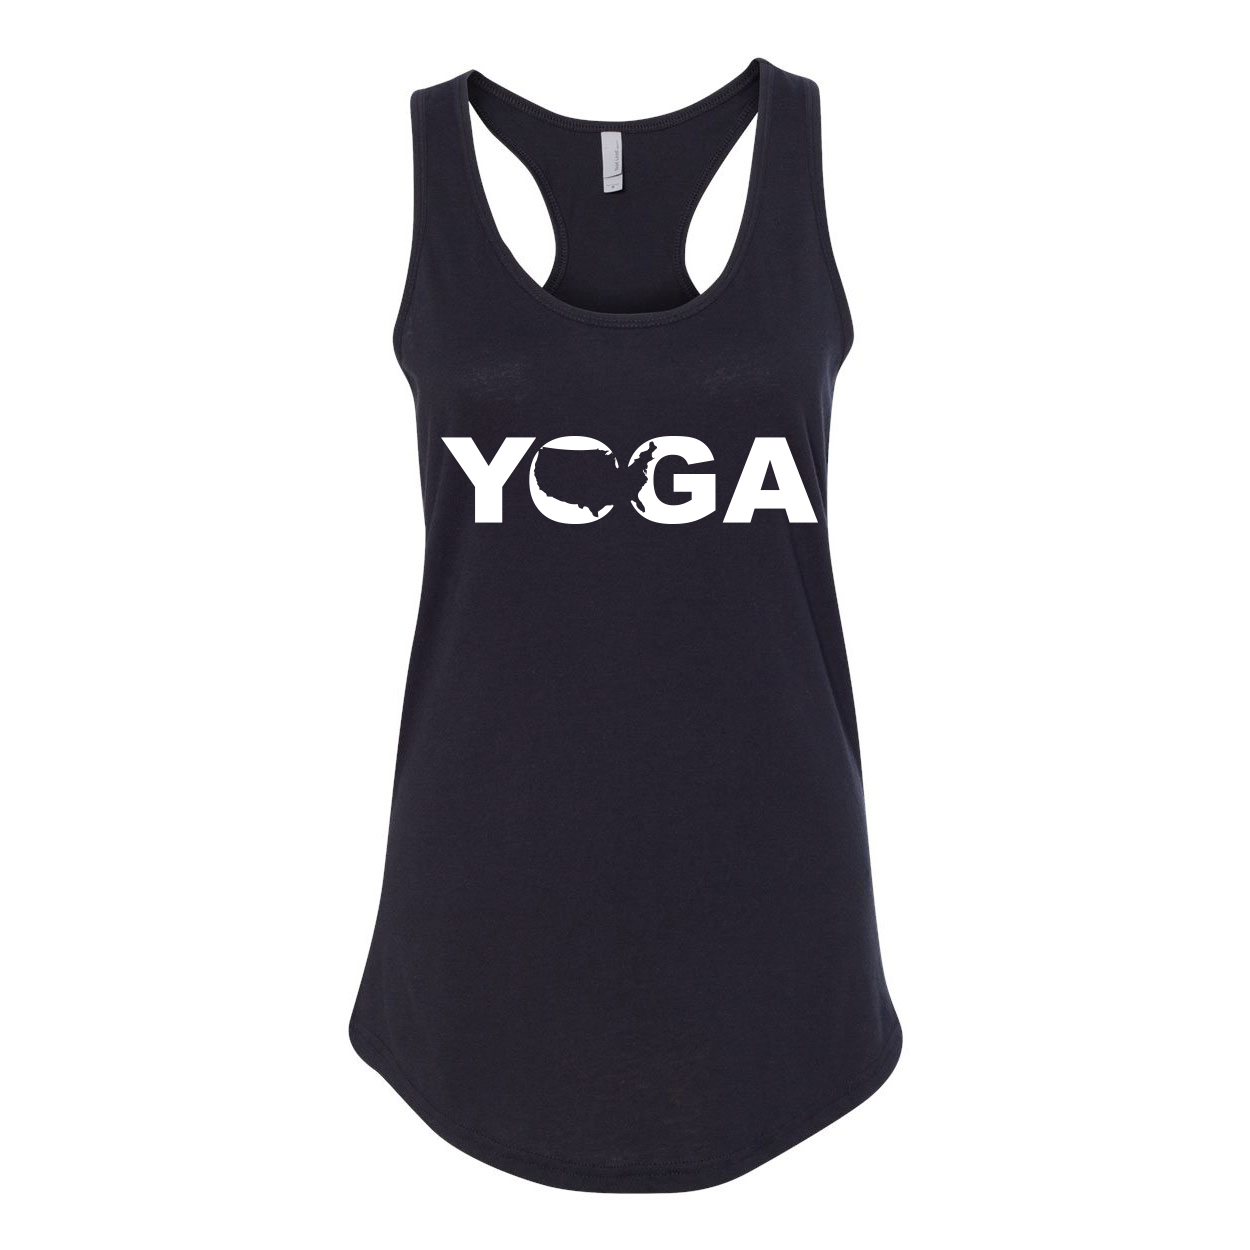 Yoga United States Classic Women's Racerback Tank Top Black (White Logo)